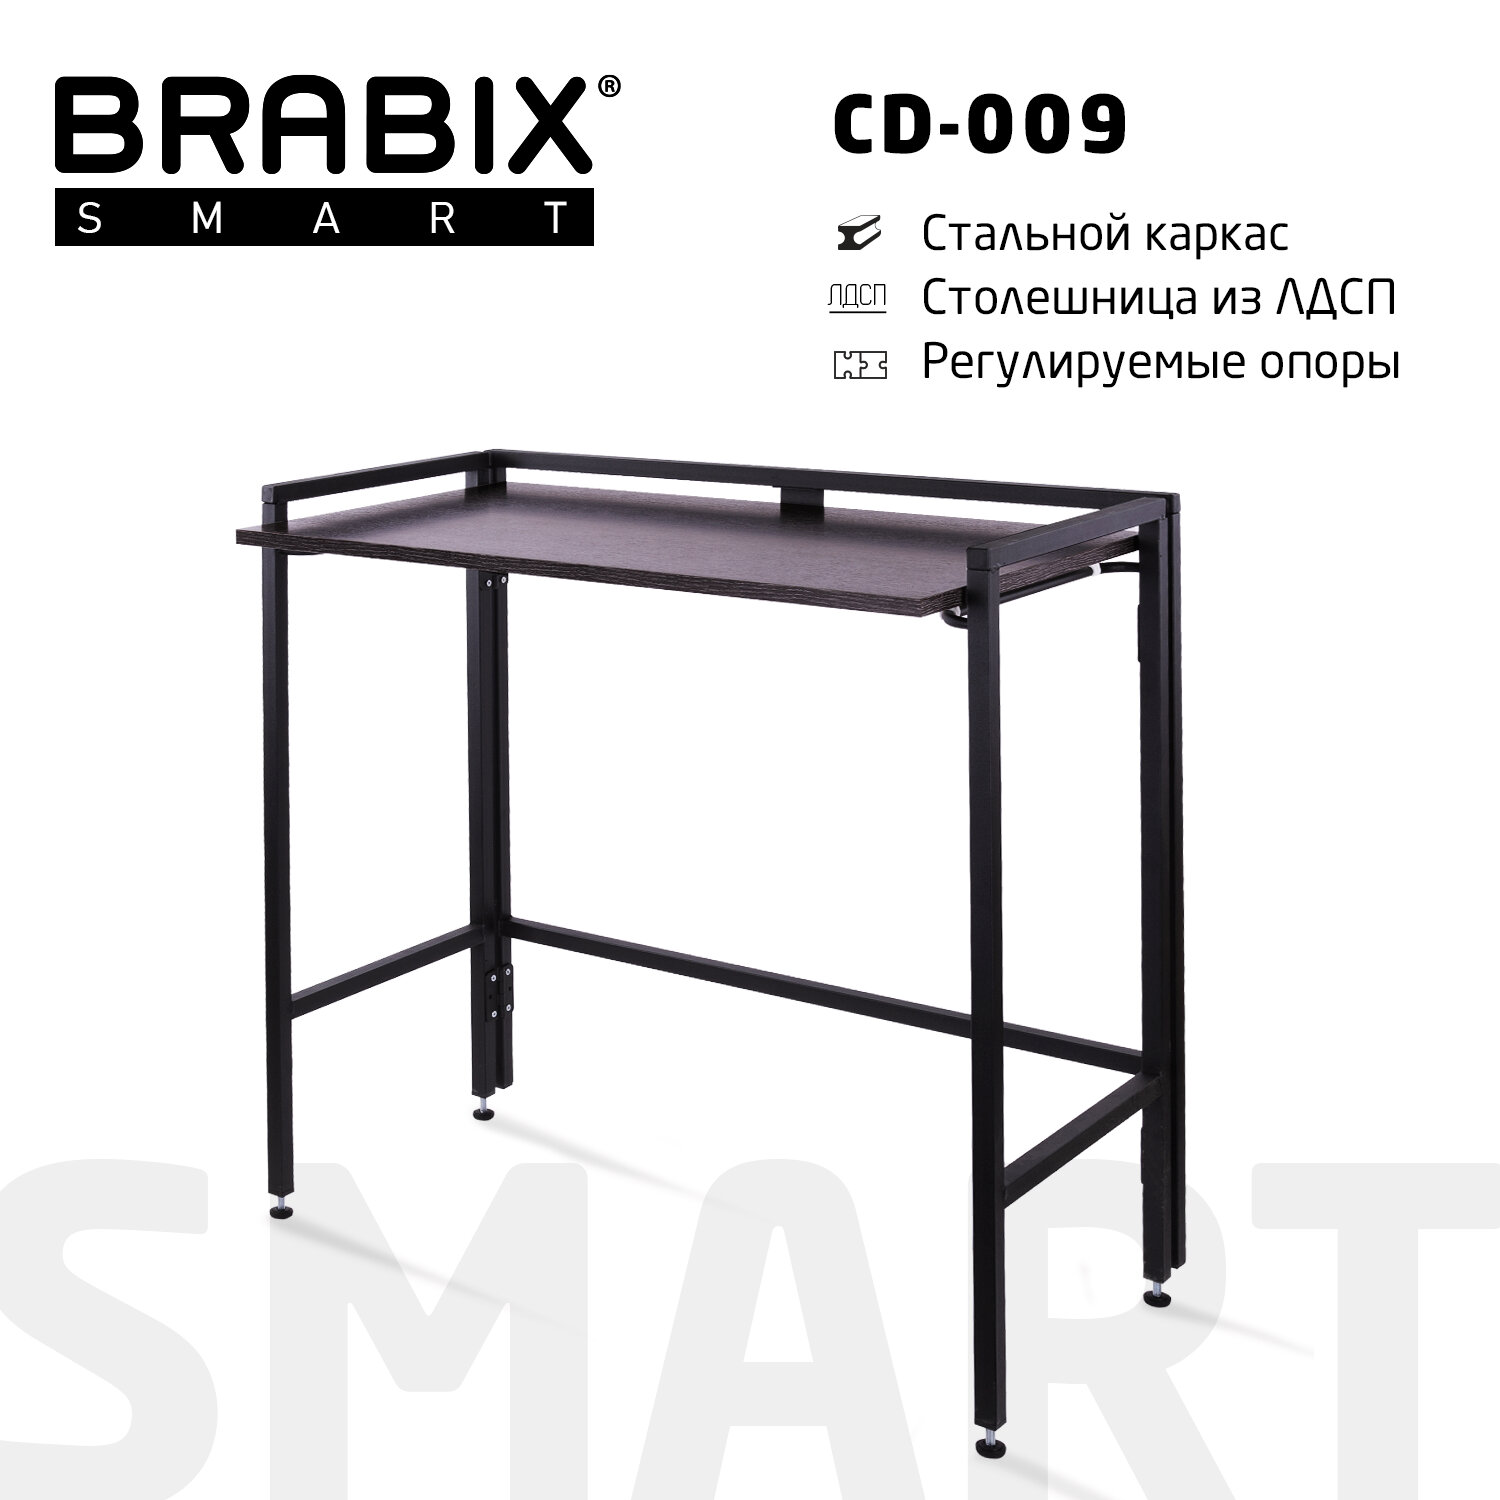  BRABIX Smart CD-009 641875